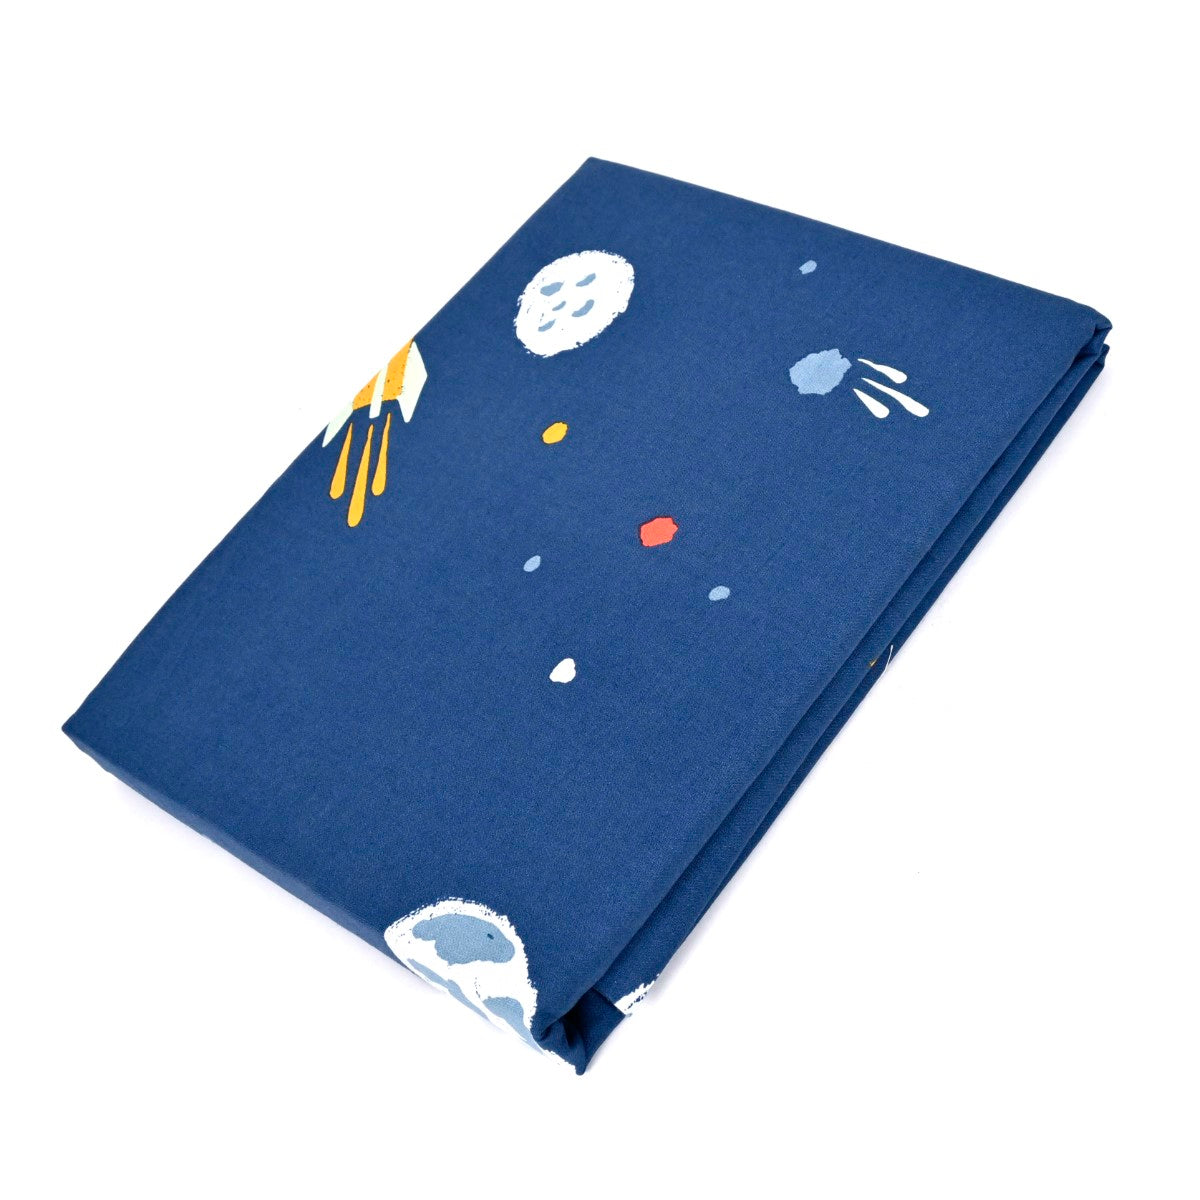 Solar System Single Bed Sheet 68x96"